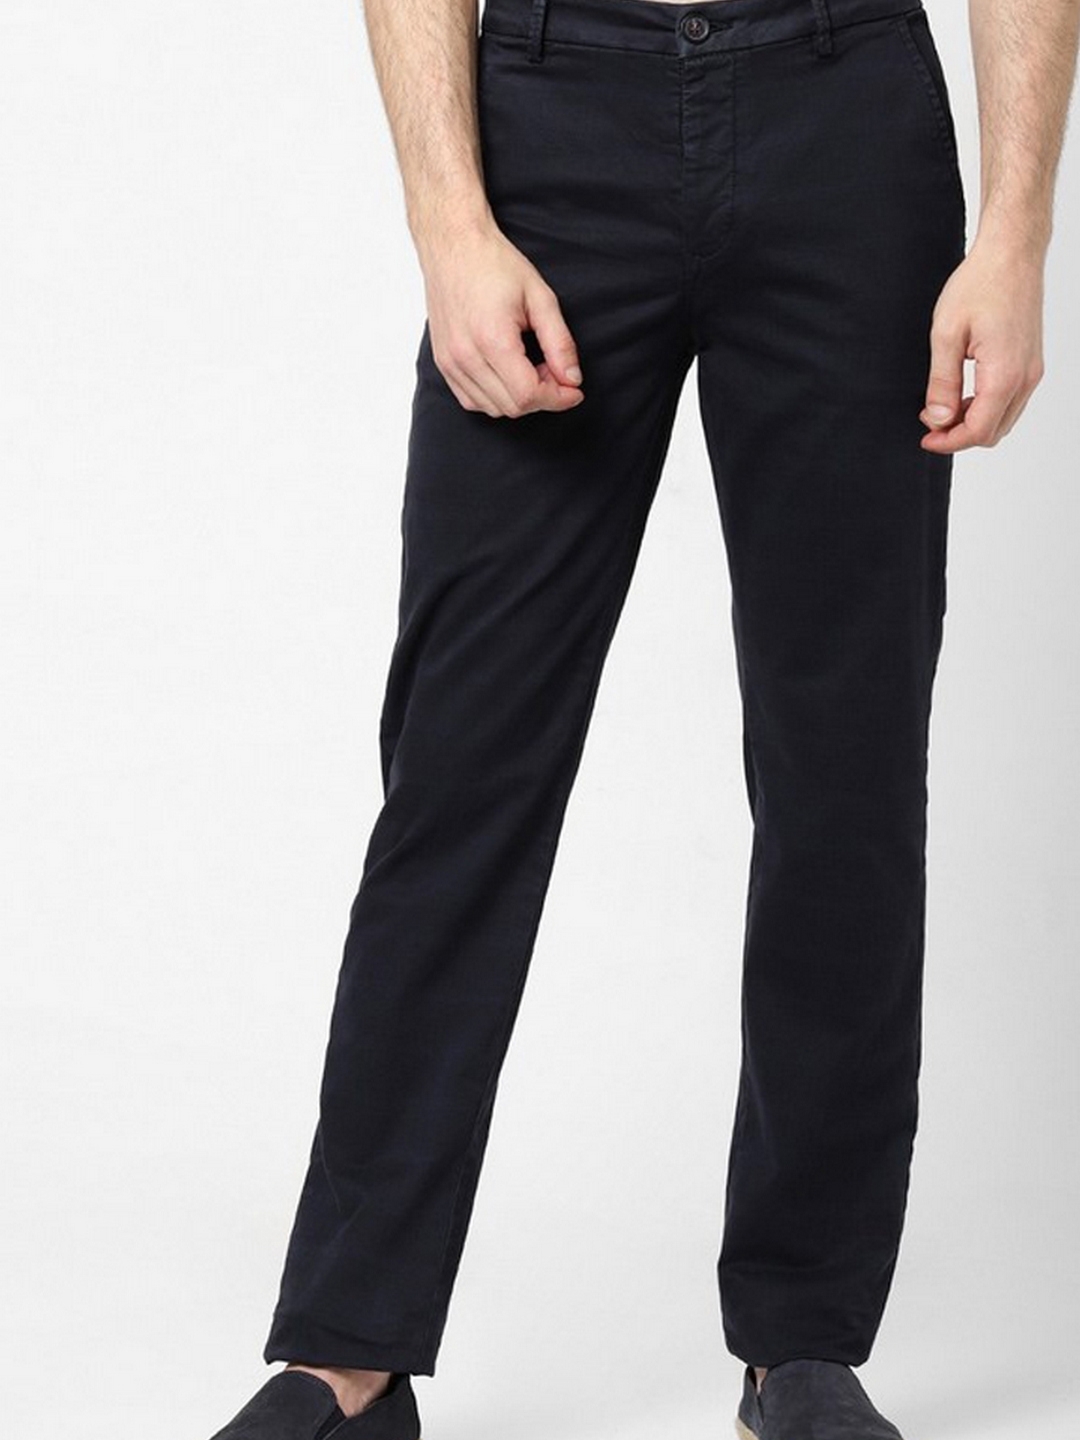 Buy Cliths Slim Fit Flat Front Black Formal Trouser for Men at Amazonin